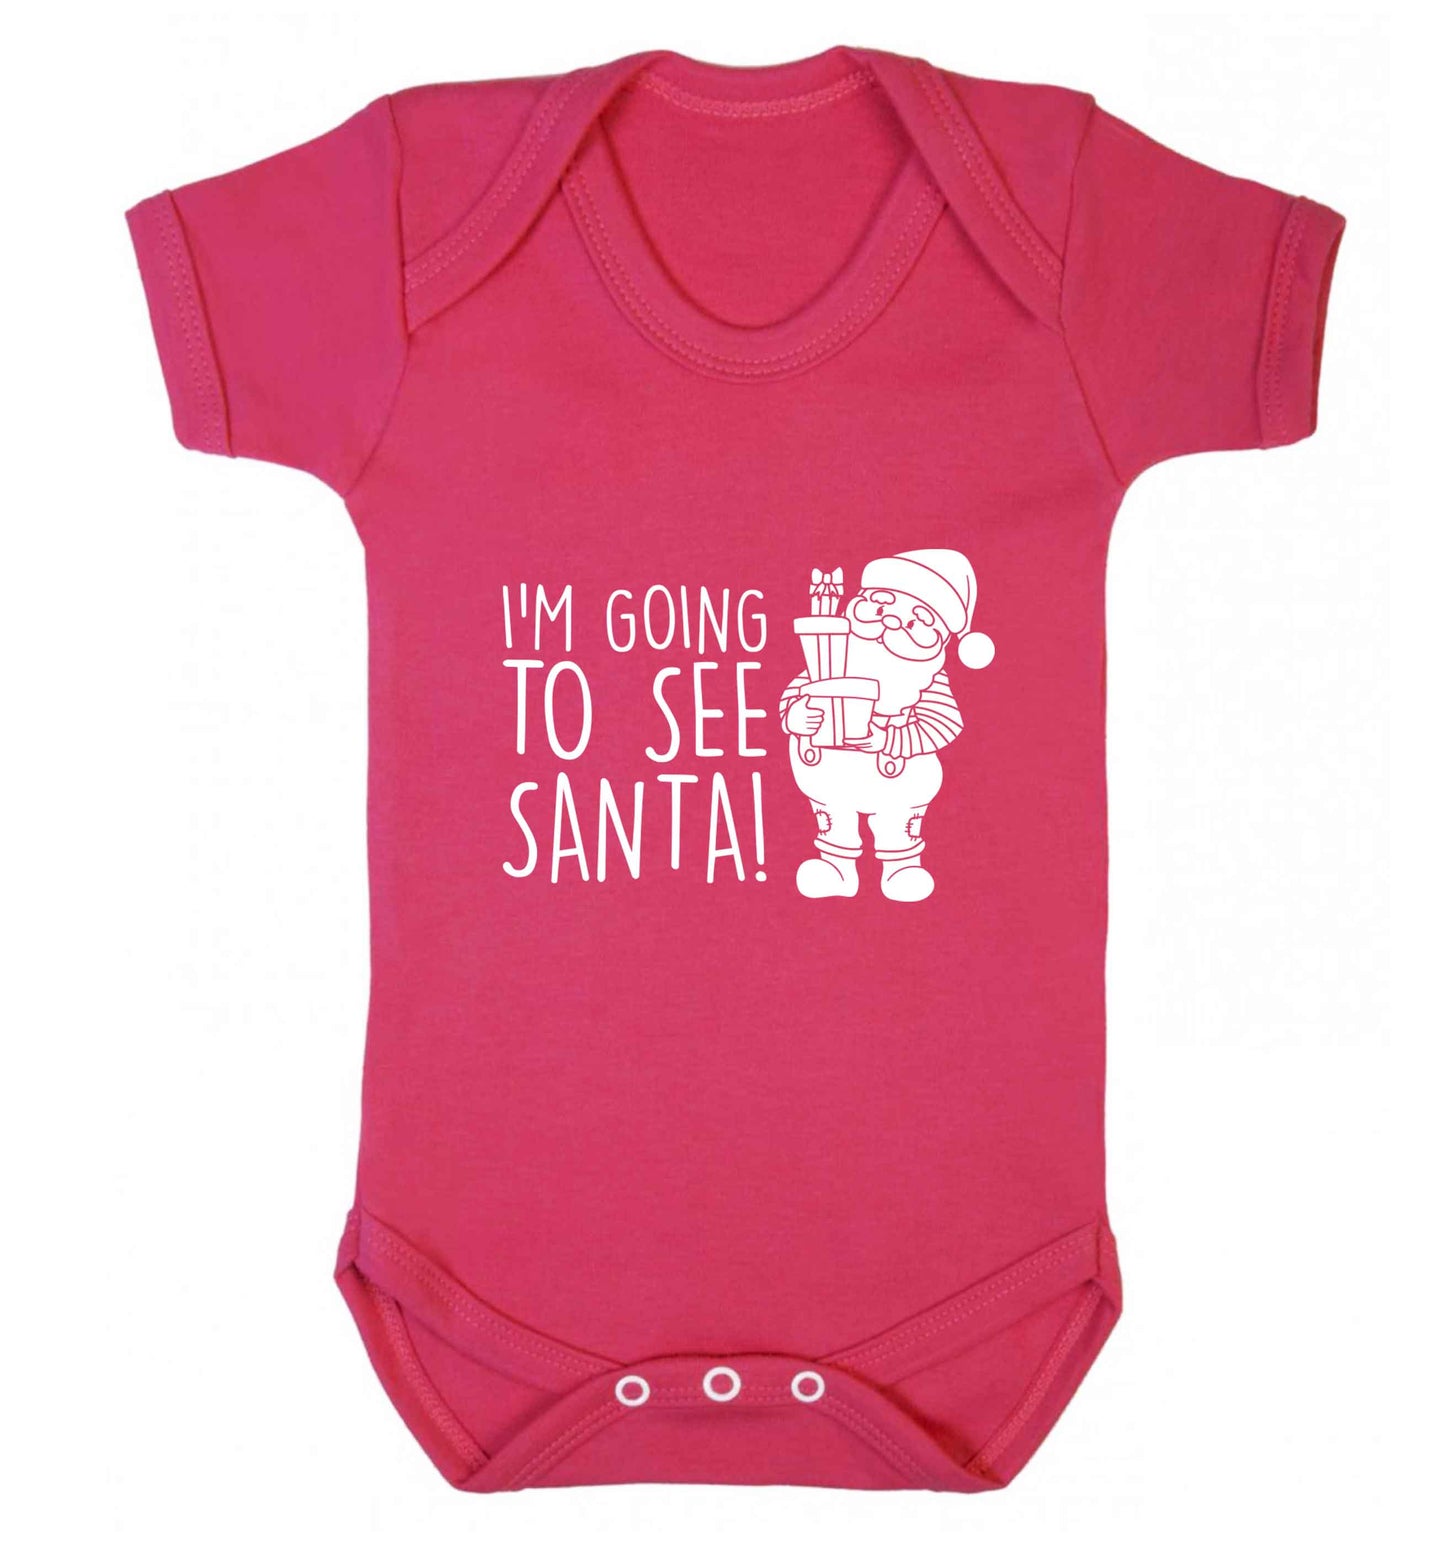 Merry Christmas baby vest dark pink 18-24 months